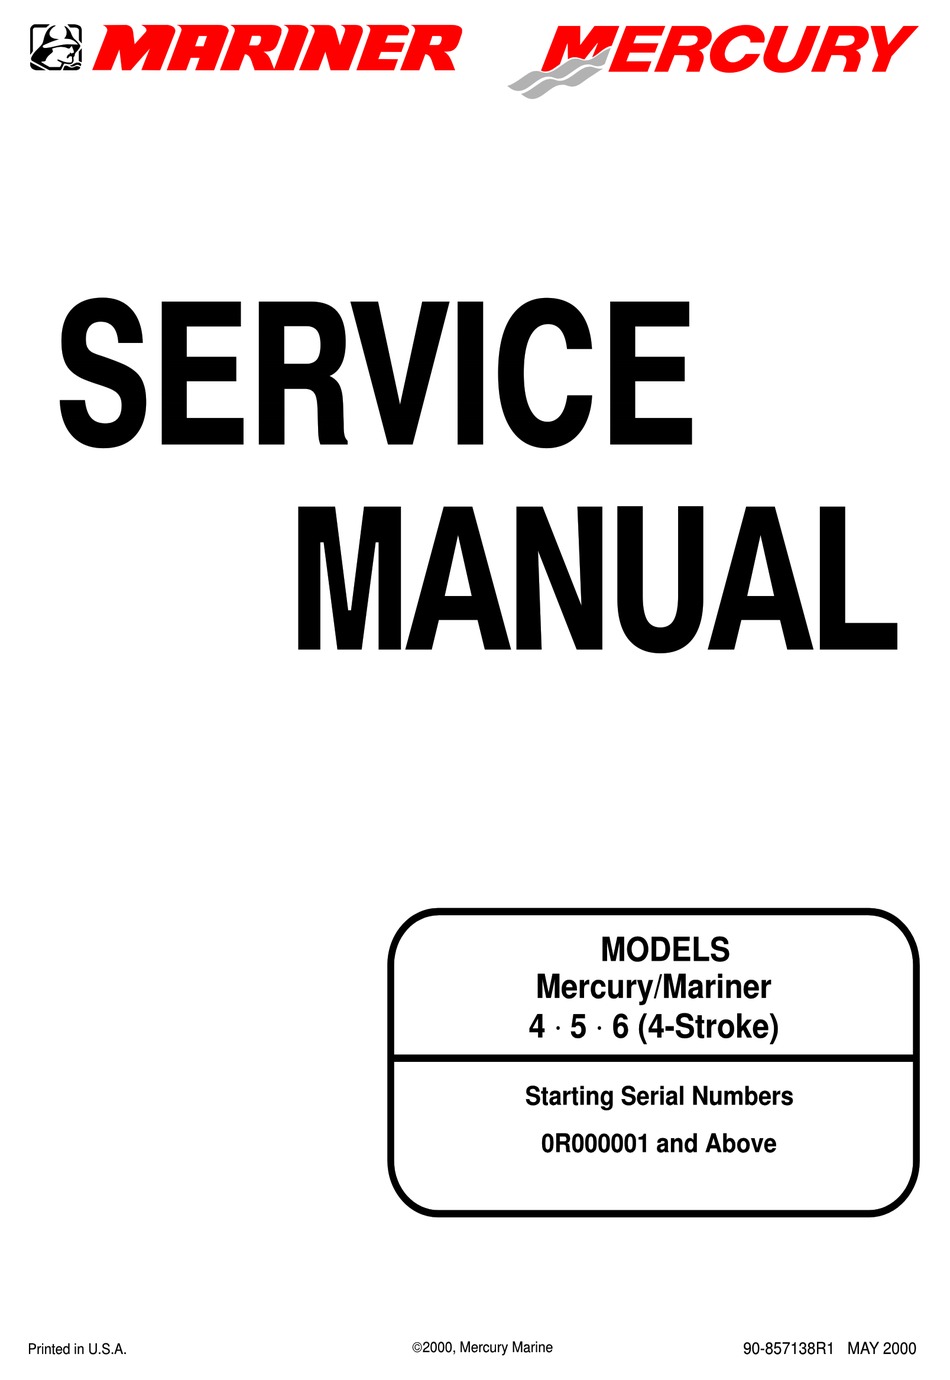 MERCURY 5 SERIES SERVICE MANUAL Pdf Download | ManualsLib